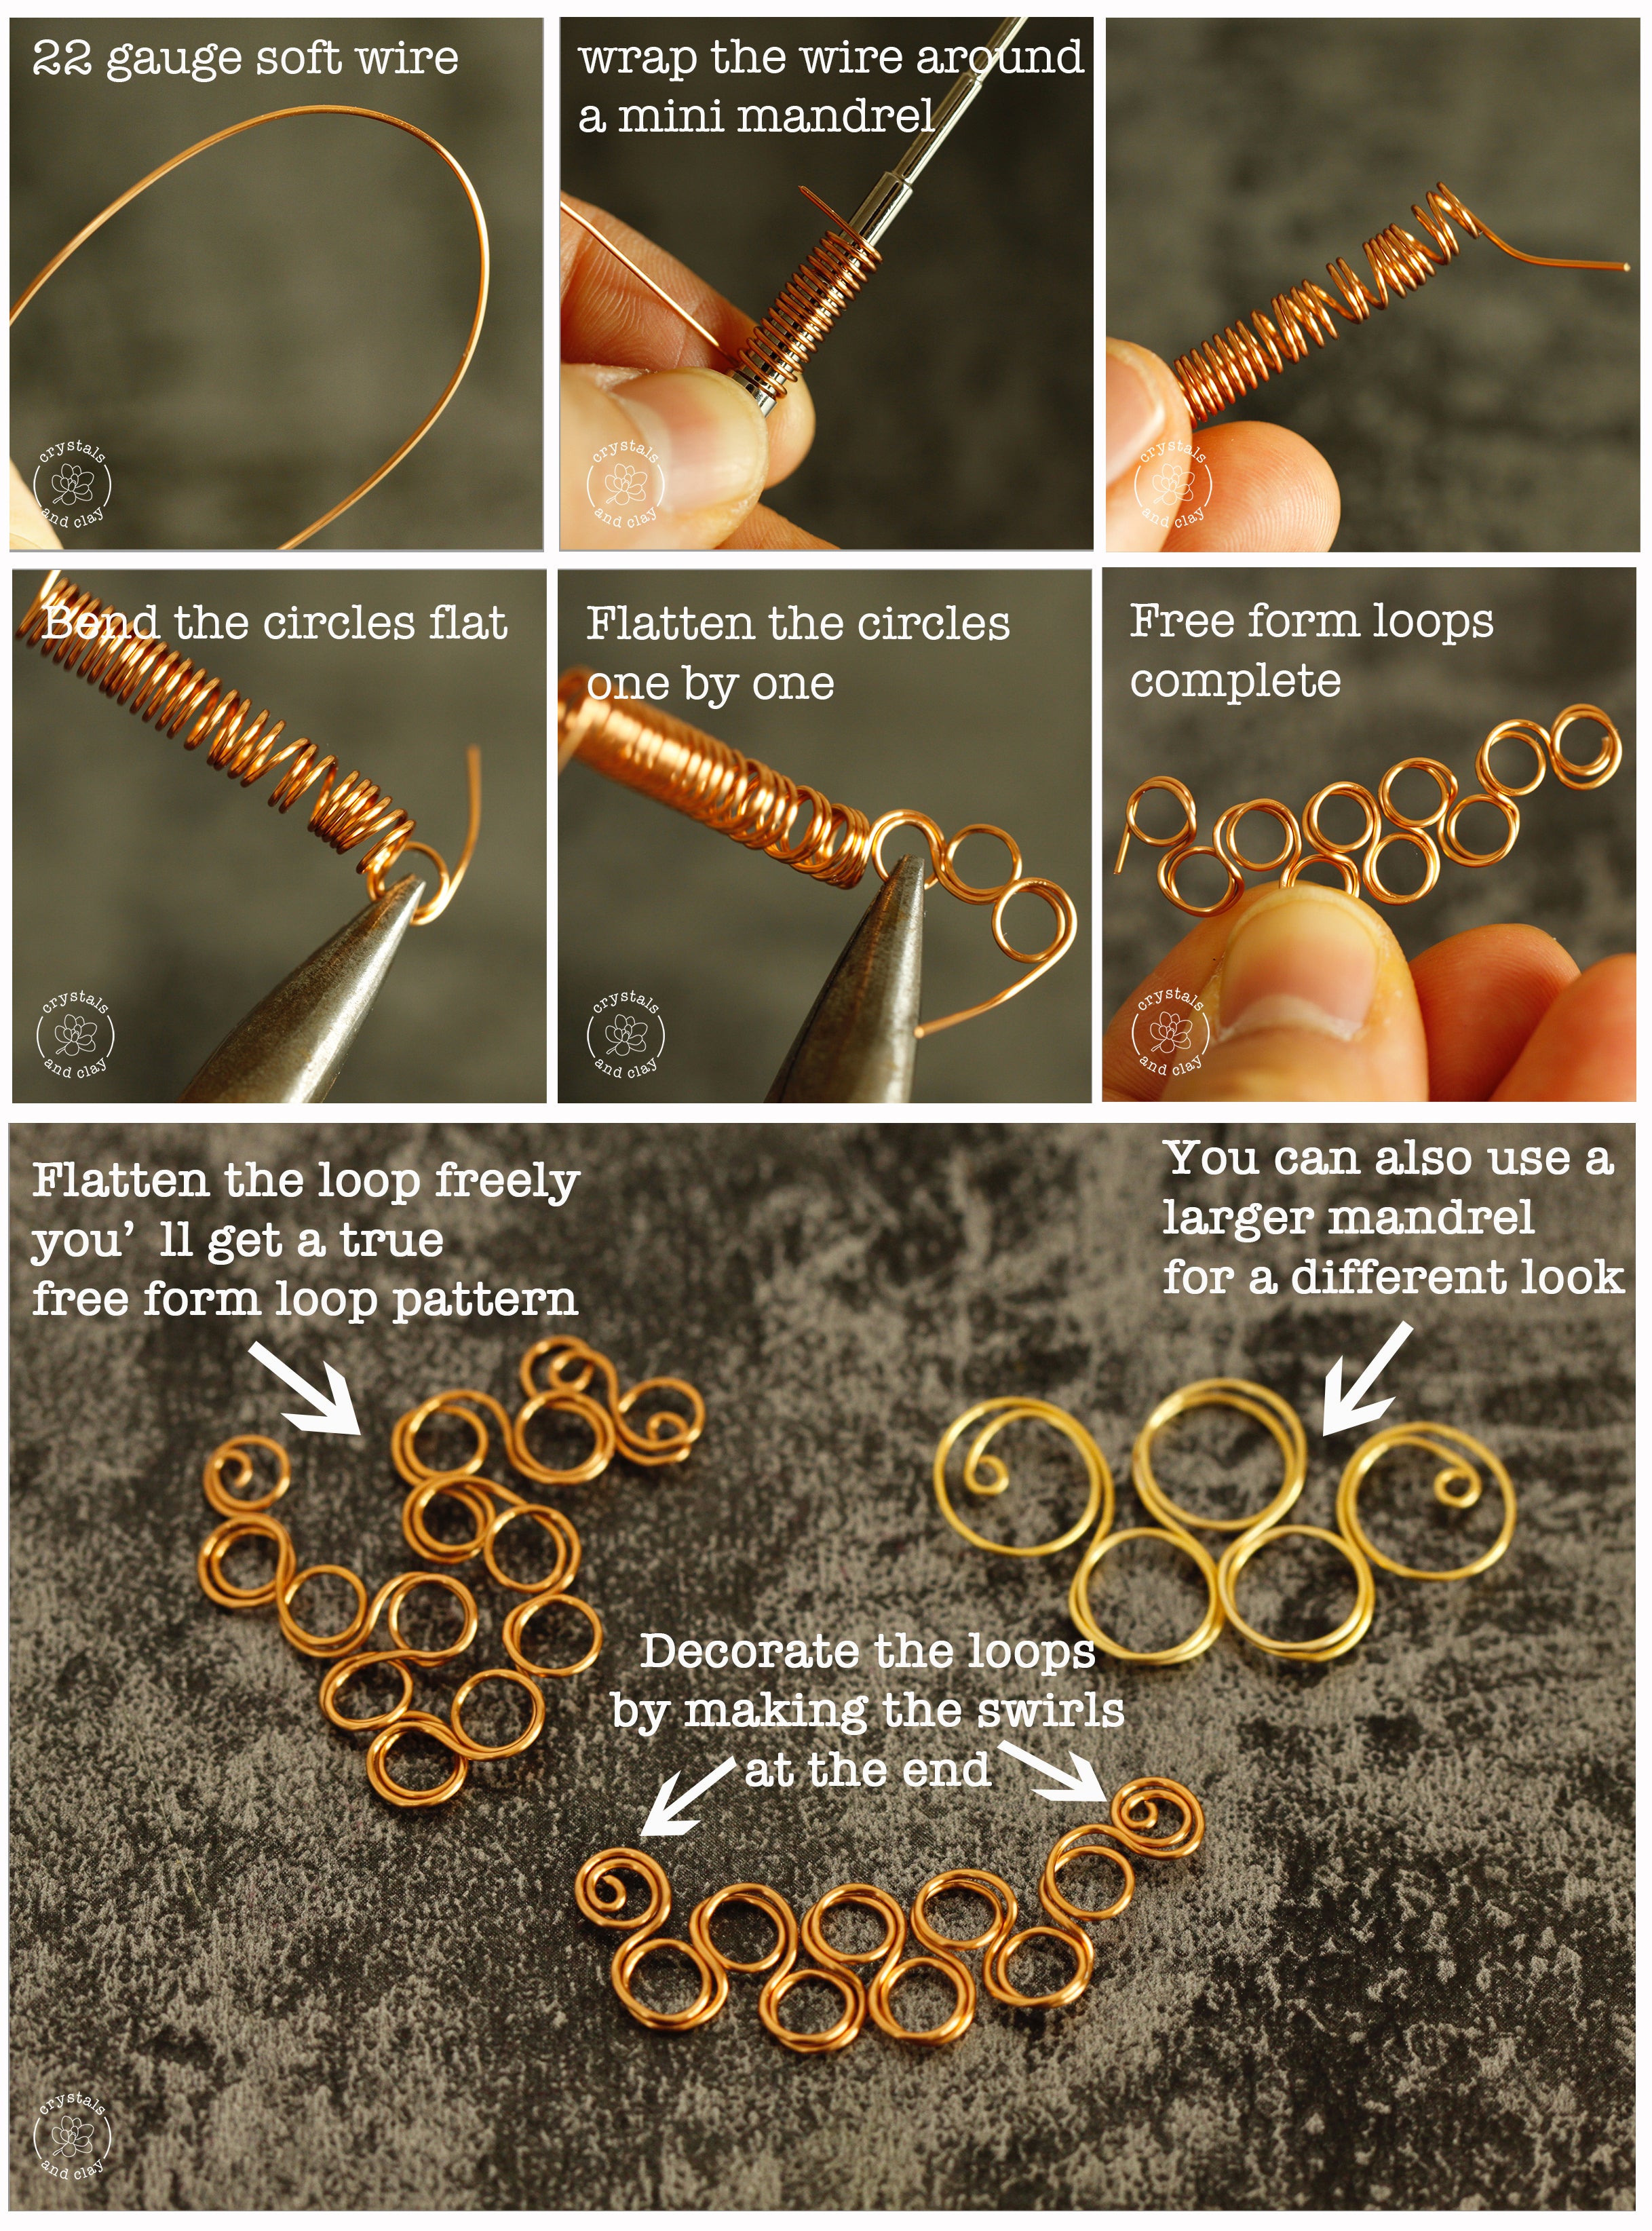 How to make beaded macrame bracelets - learn three knots in one